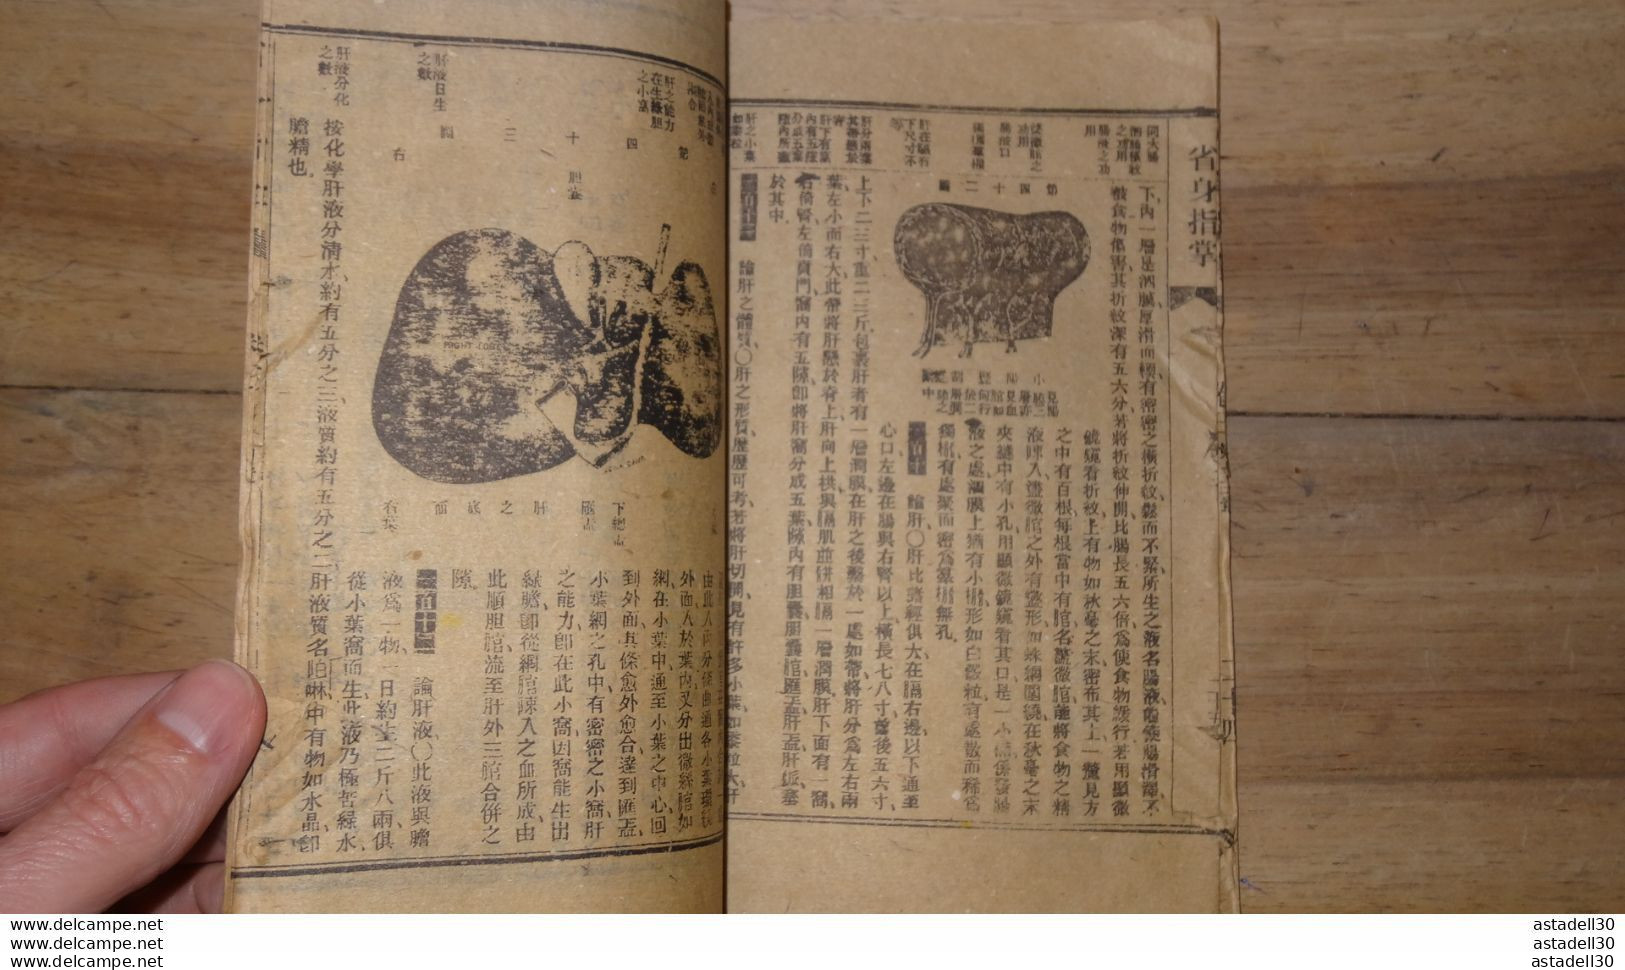 CHINA - CHINe : 6 vieux livres medecine chinoise a dechiferer  ........ LIV-CHI............ Caisse-40